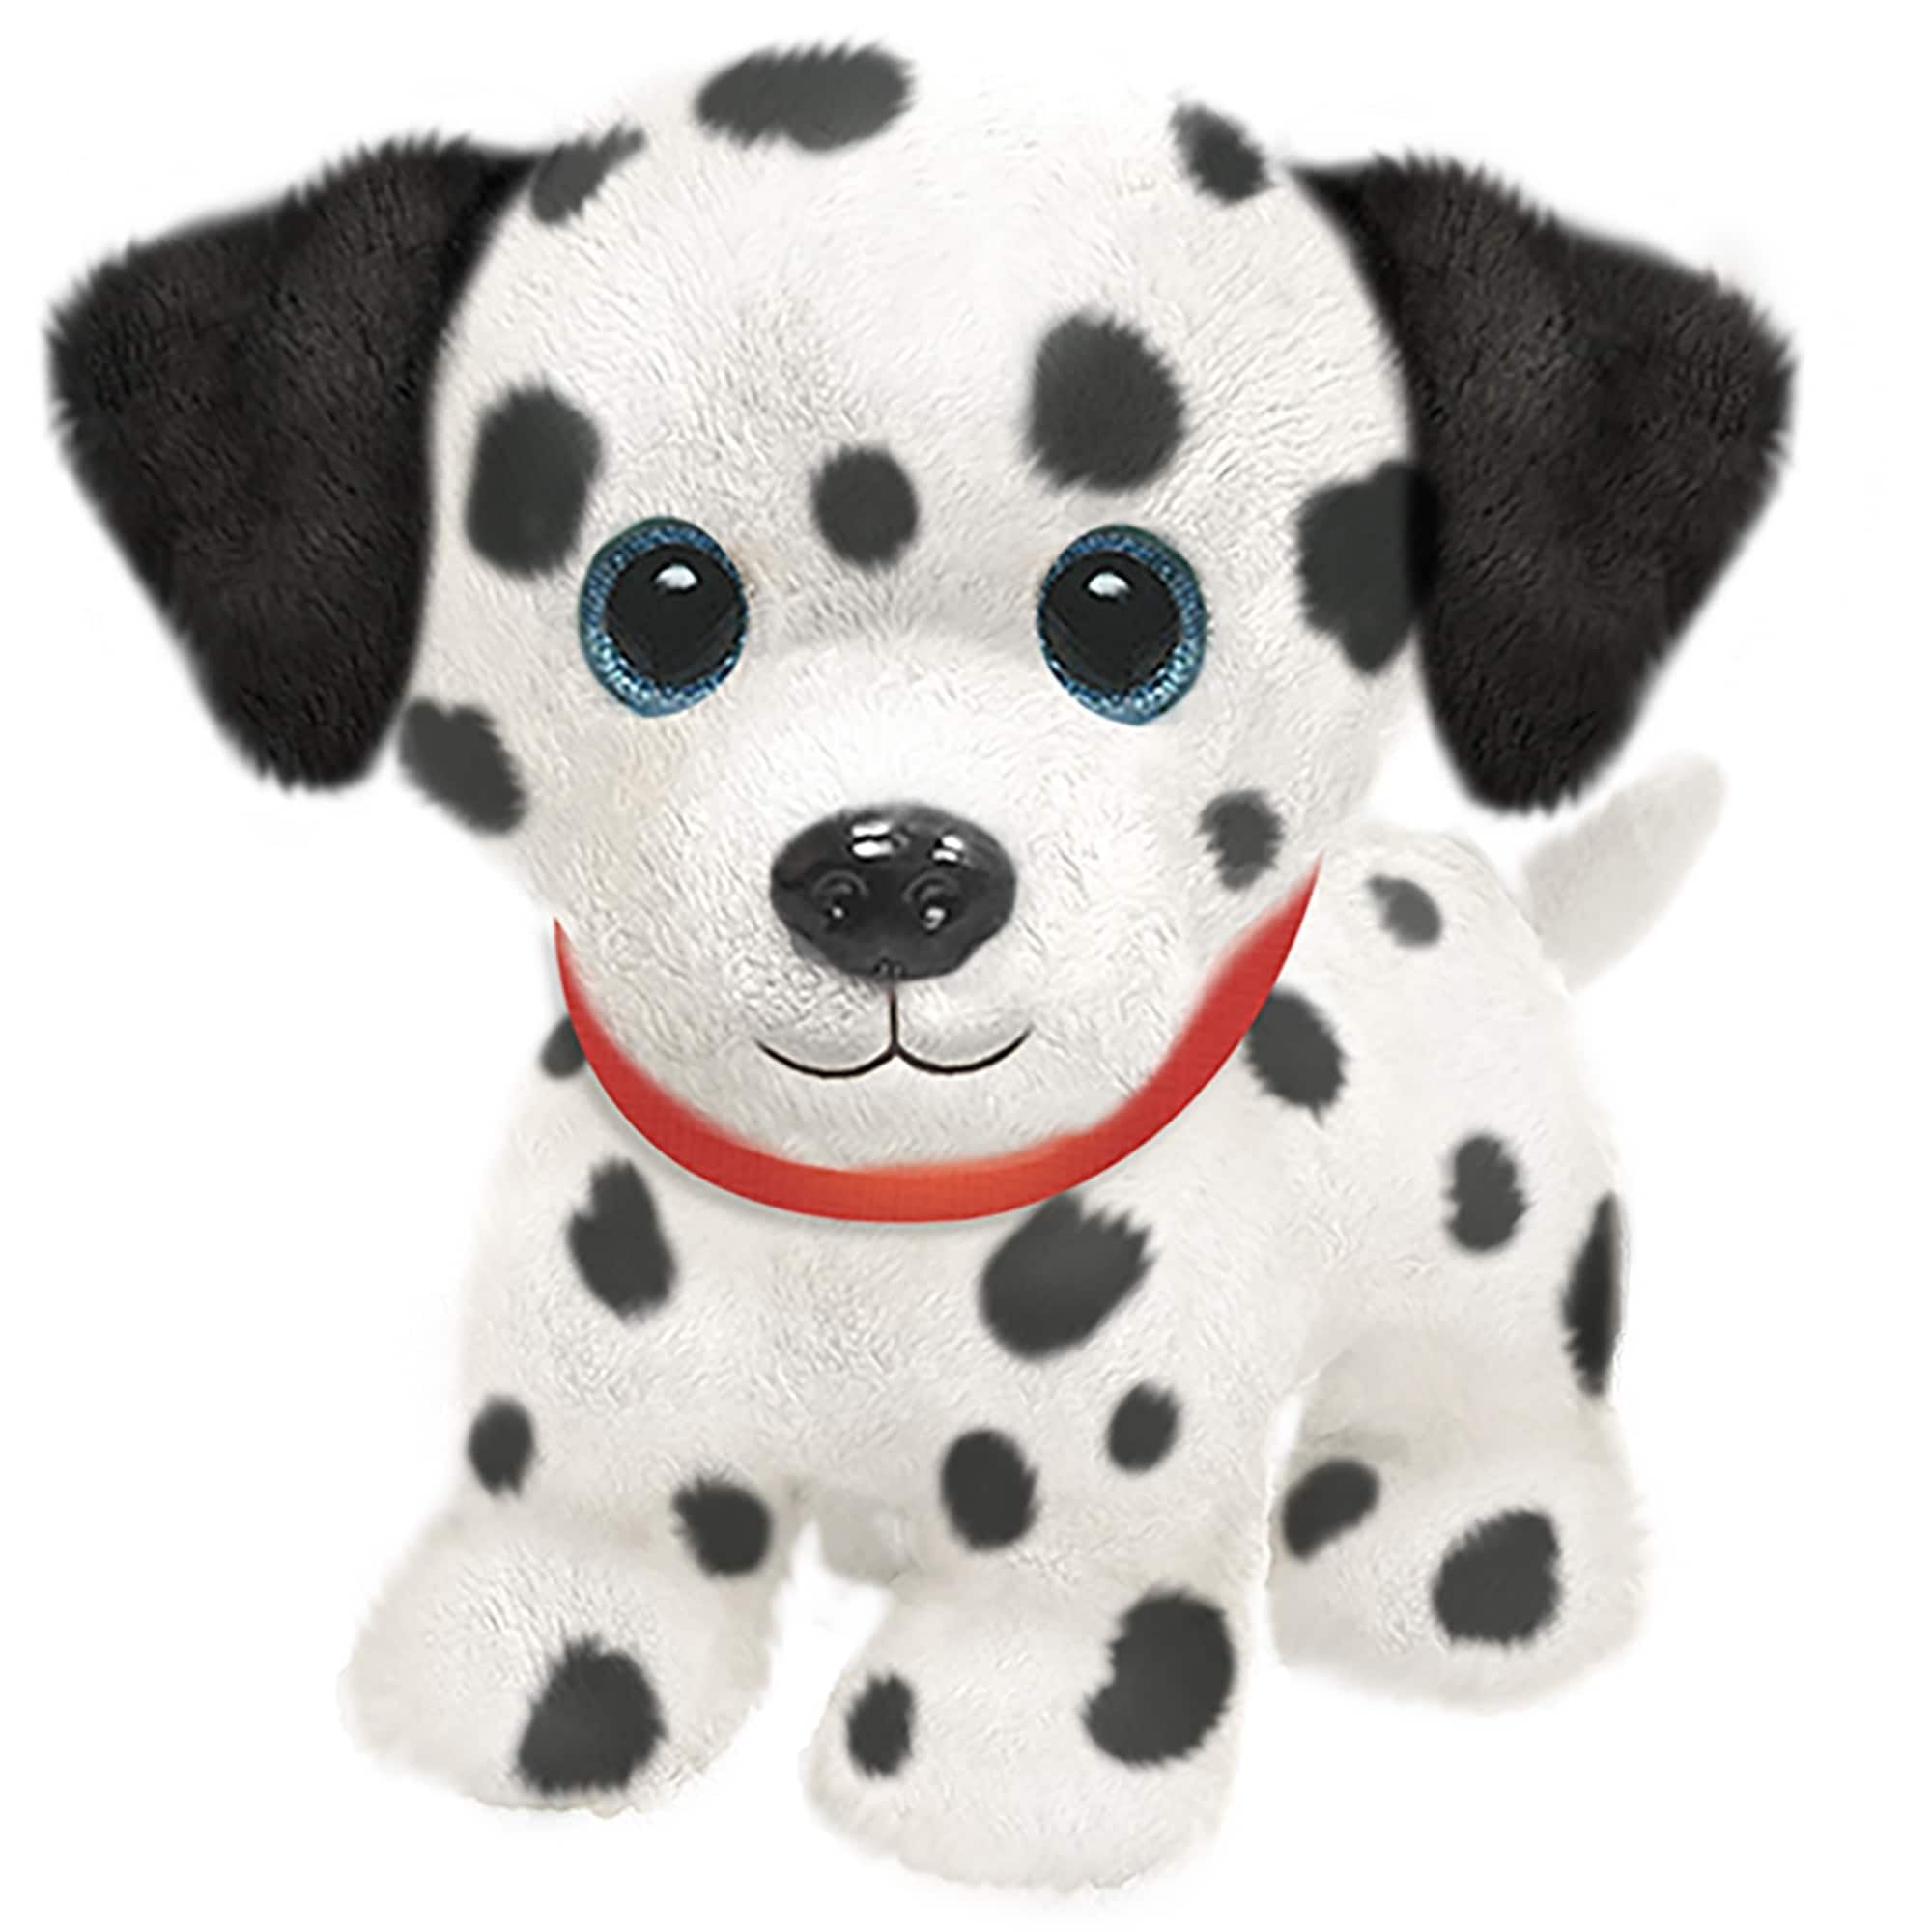 Dooley Dalmatian 8 Inch Dog & Puppy Stuffed Animal by Douglas Cuddle Toys 4010 for sale online 